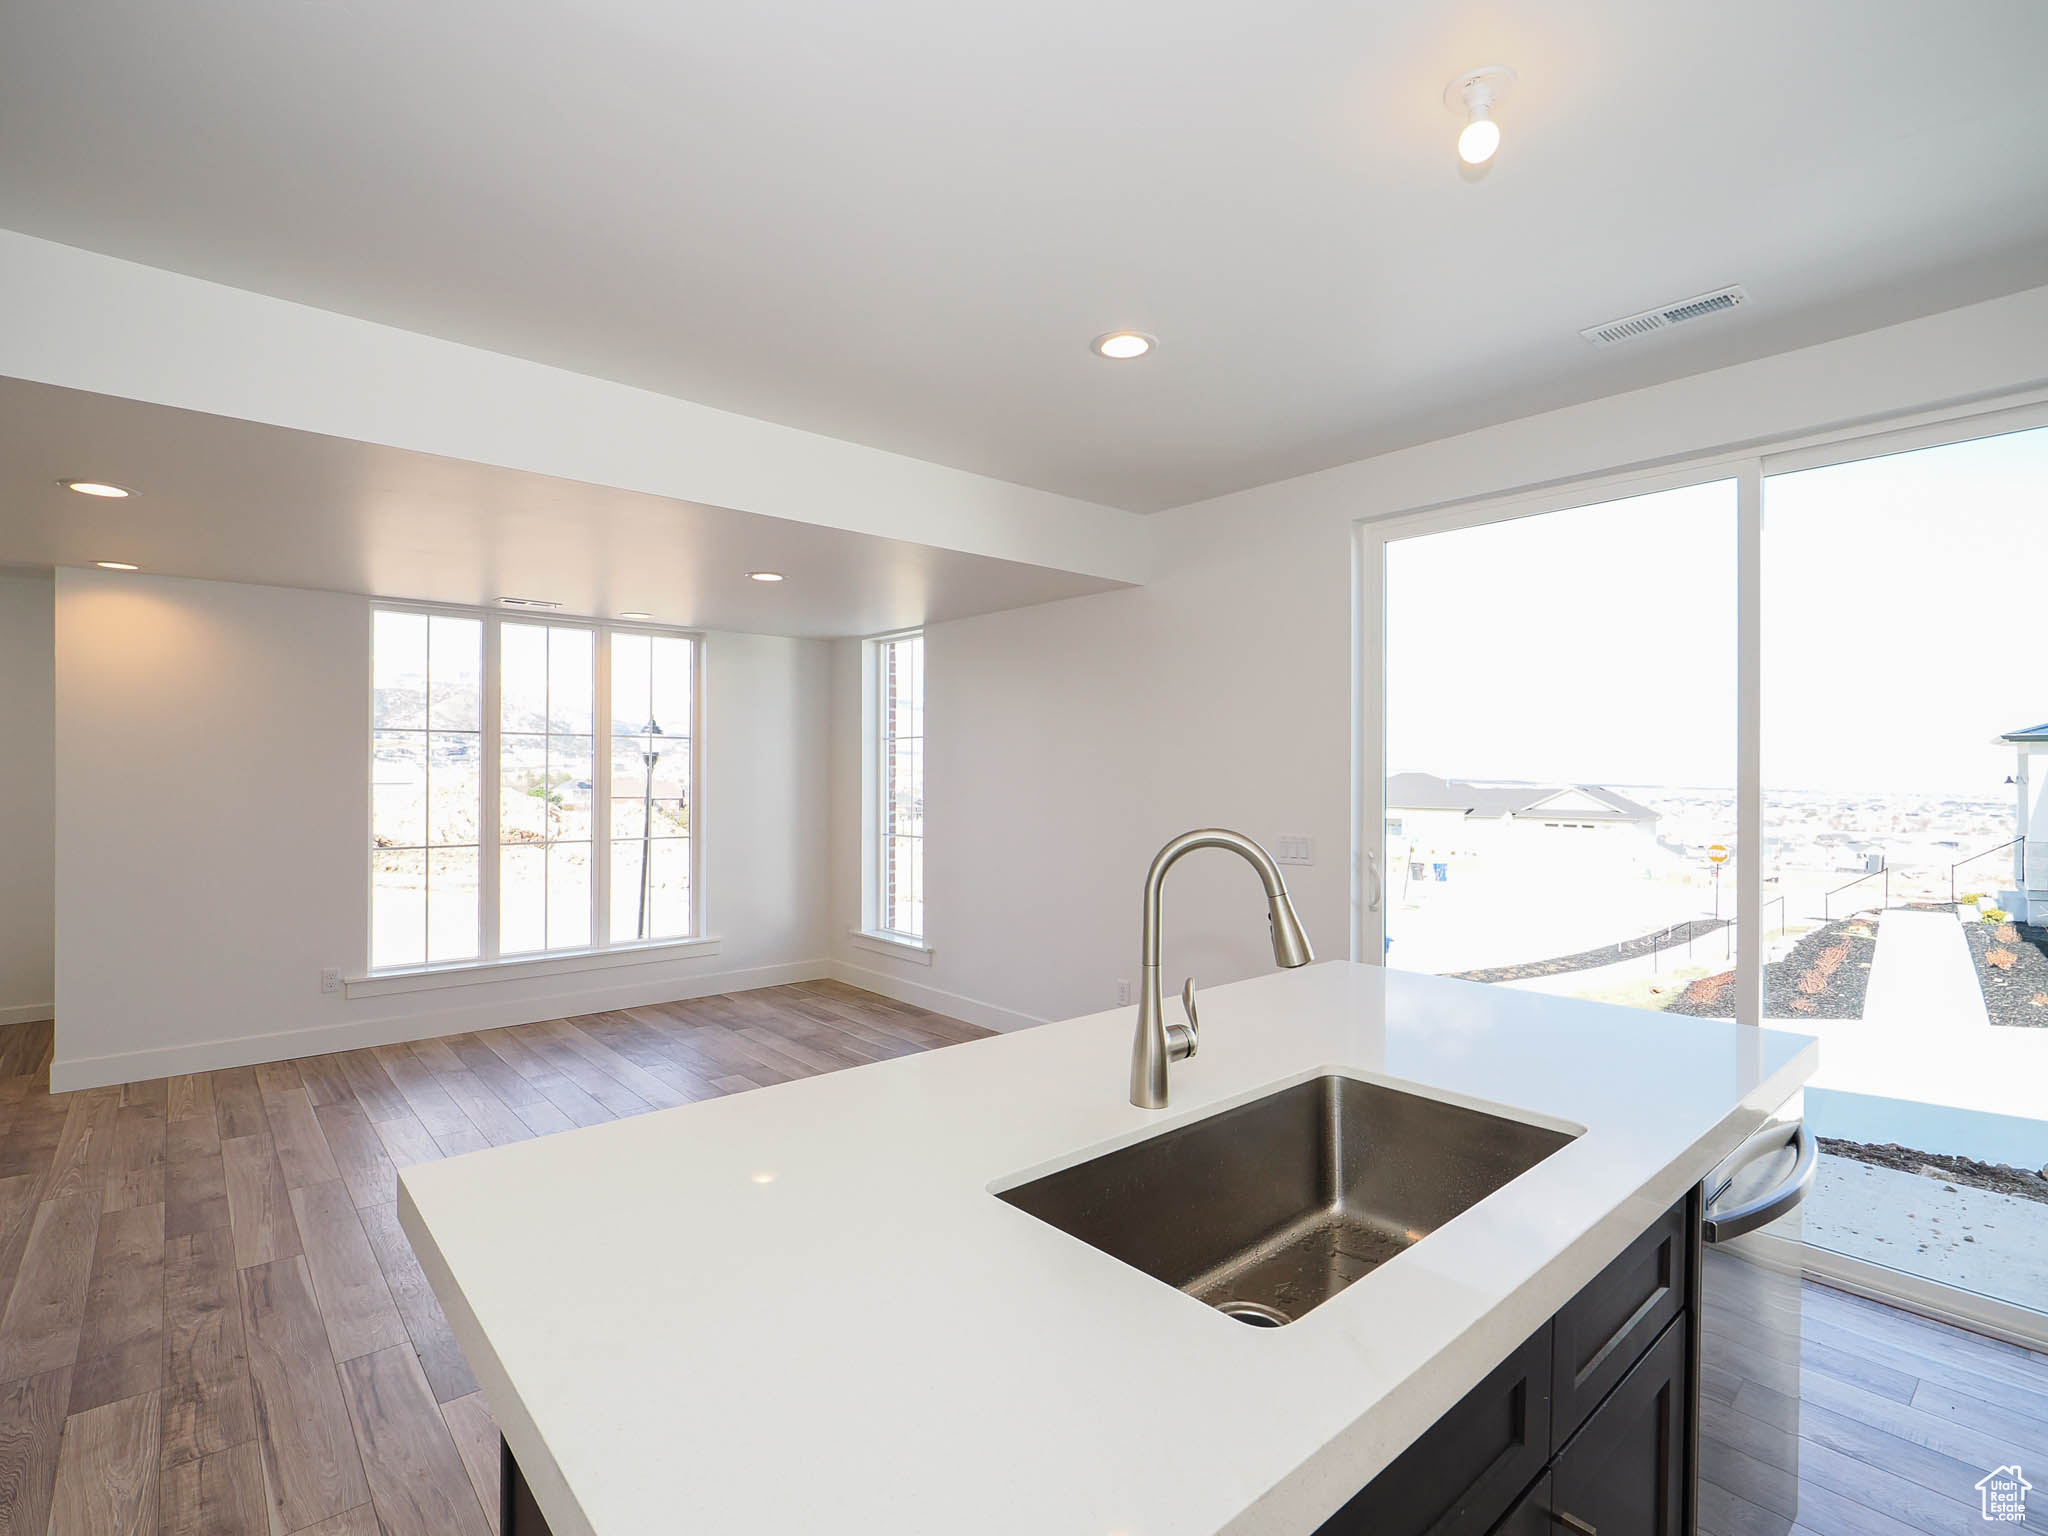 Kitchen featuring sink, dishwasher, and hardwood / wood-style flooring